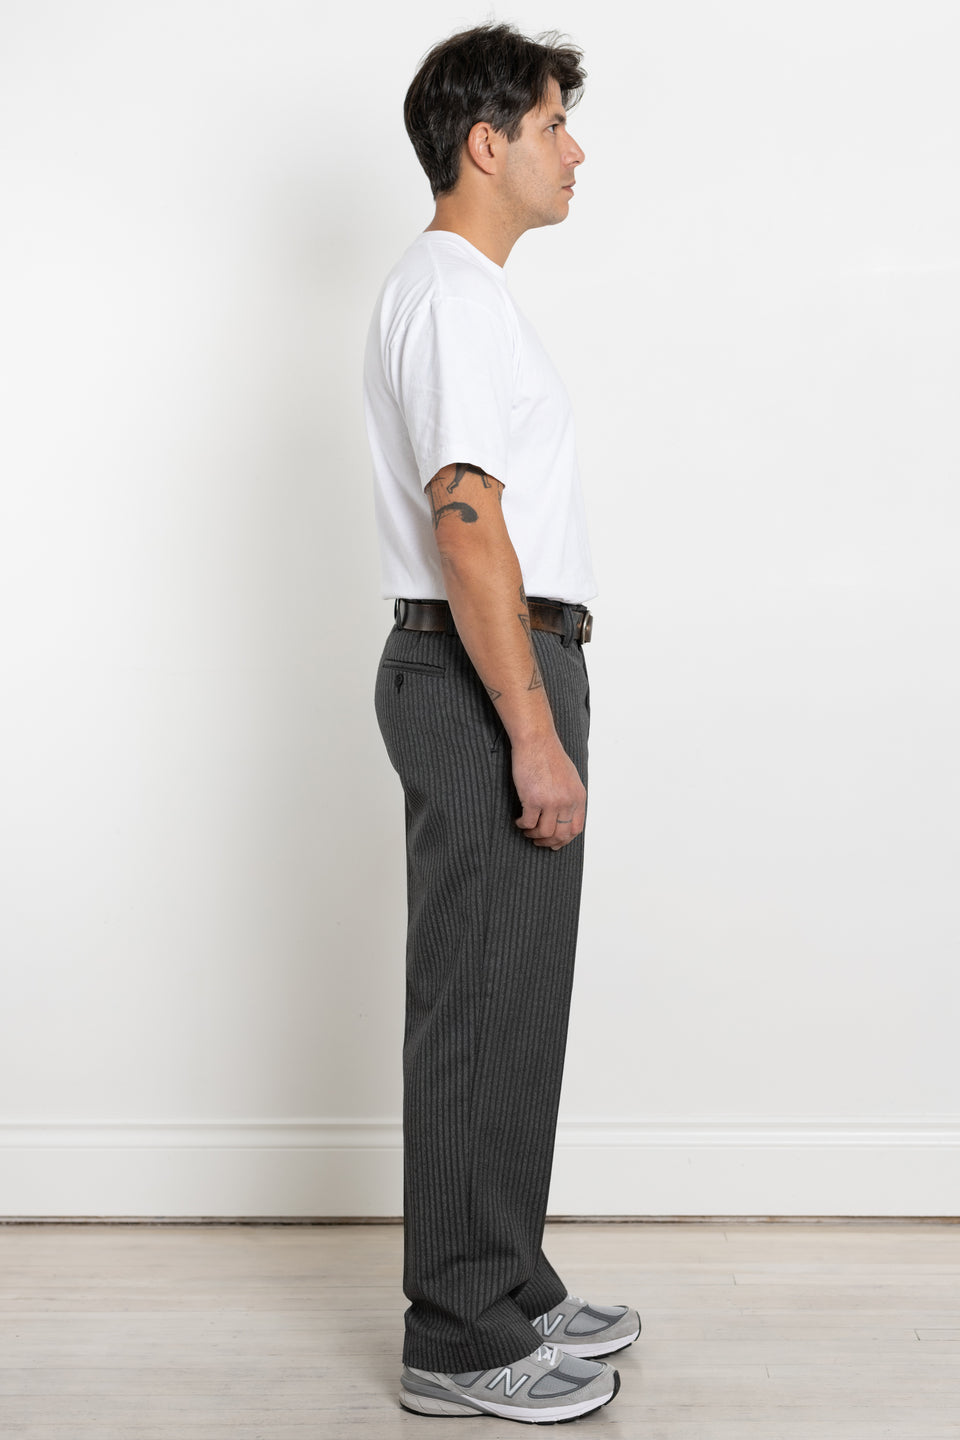 mfpen AW23 or FW23 Men's Collection Studio Trousers Dark Grey Stripe Calculus Victoria BC Canada